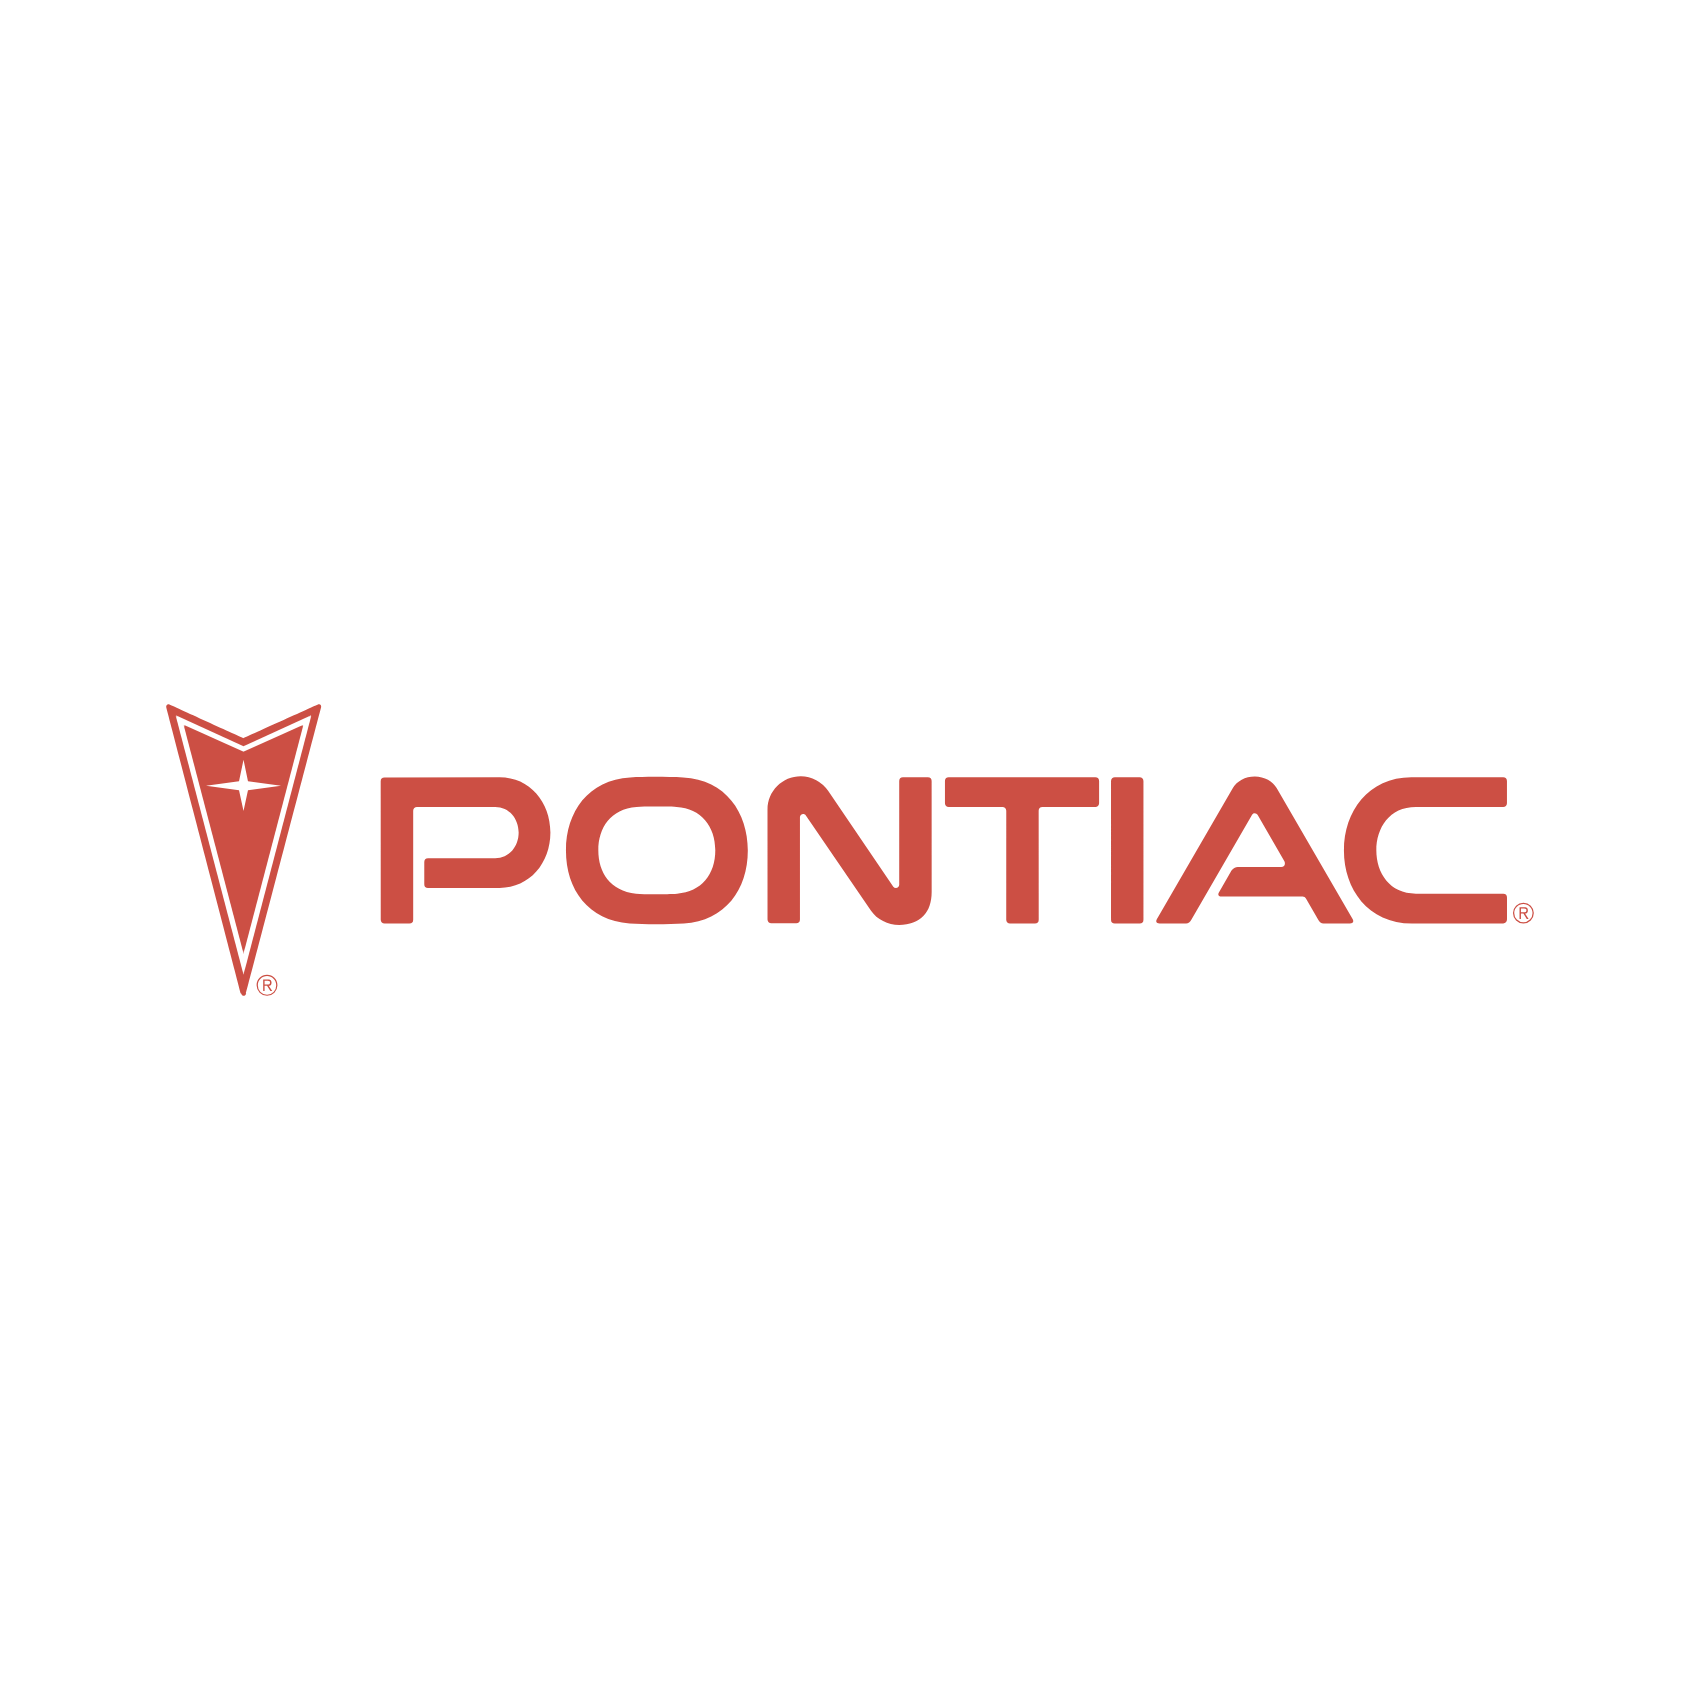 Pontiac Arrow Emblem Steel Sign